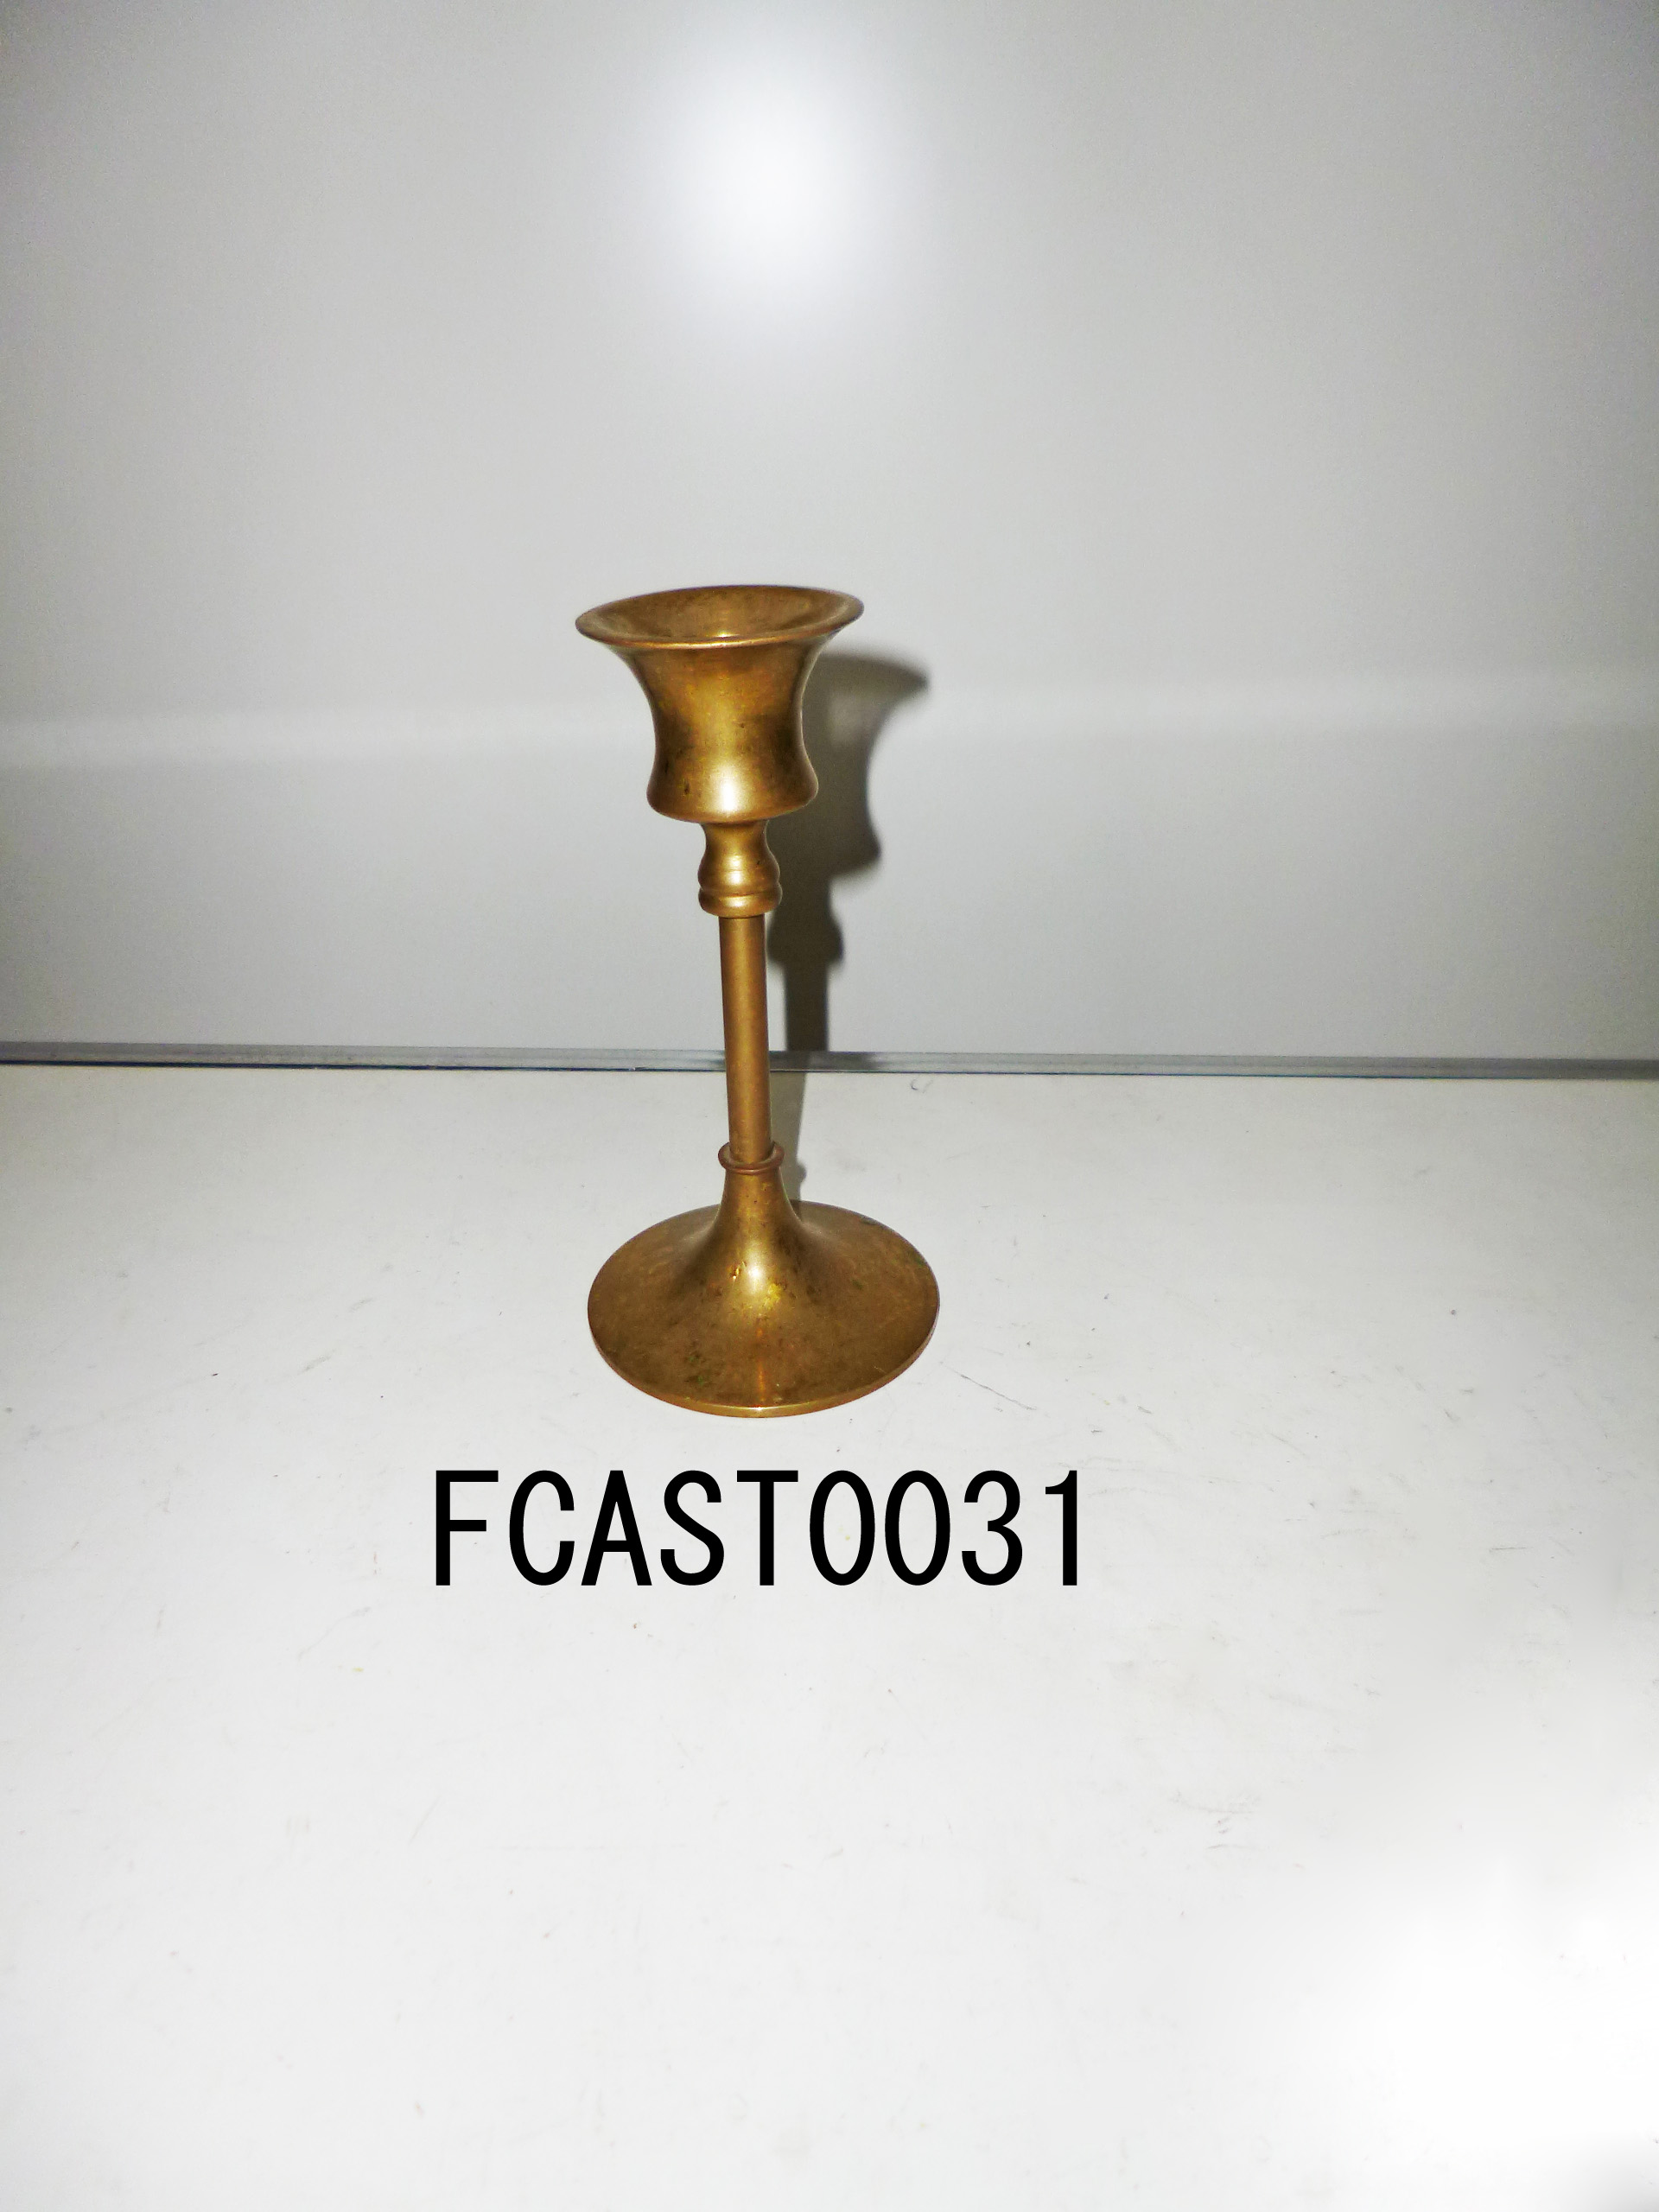 FCAST0031